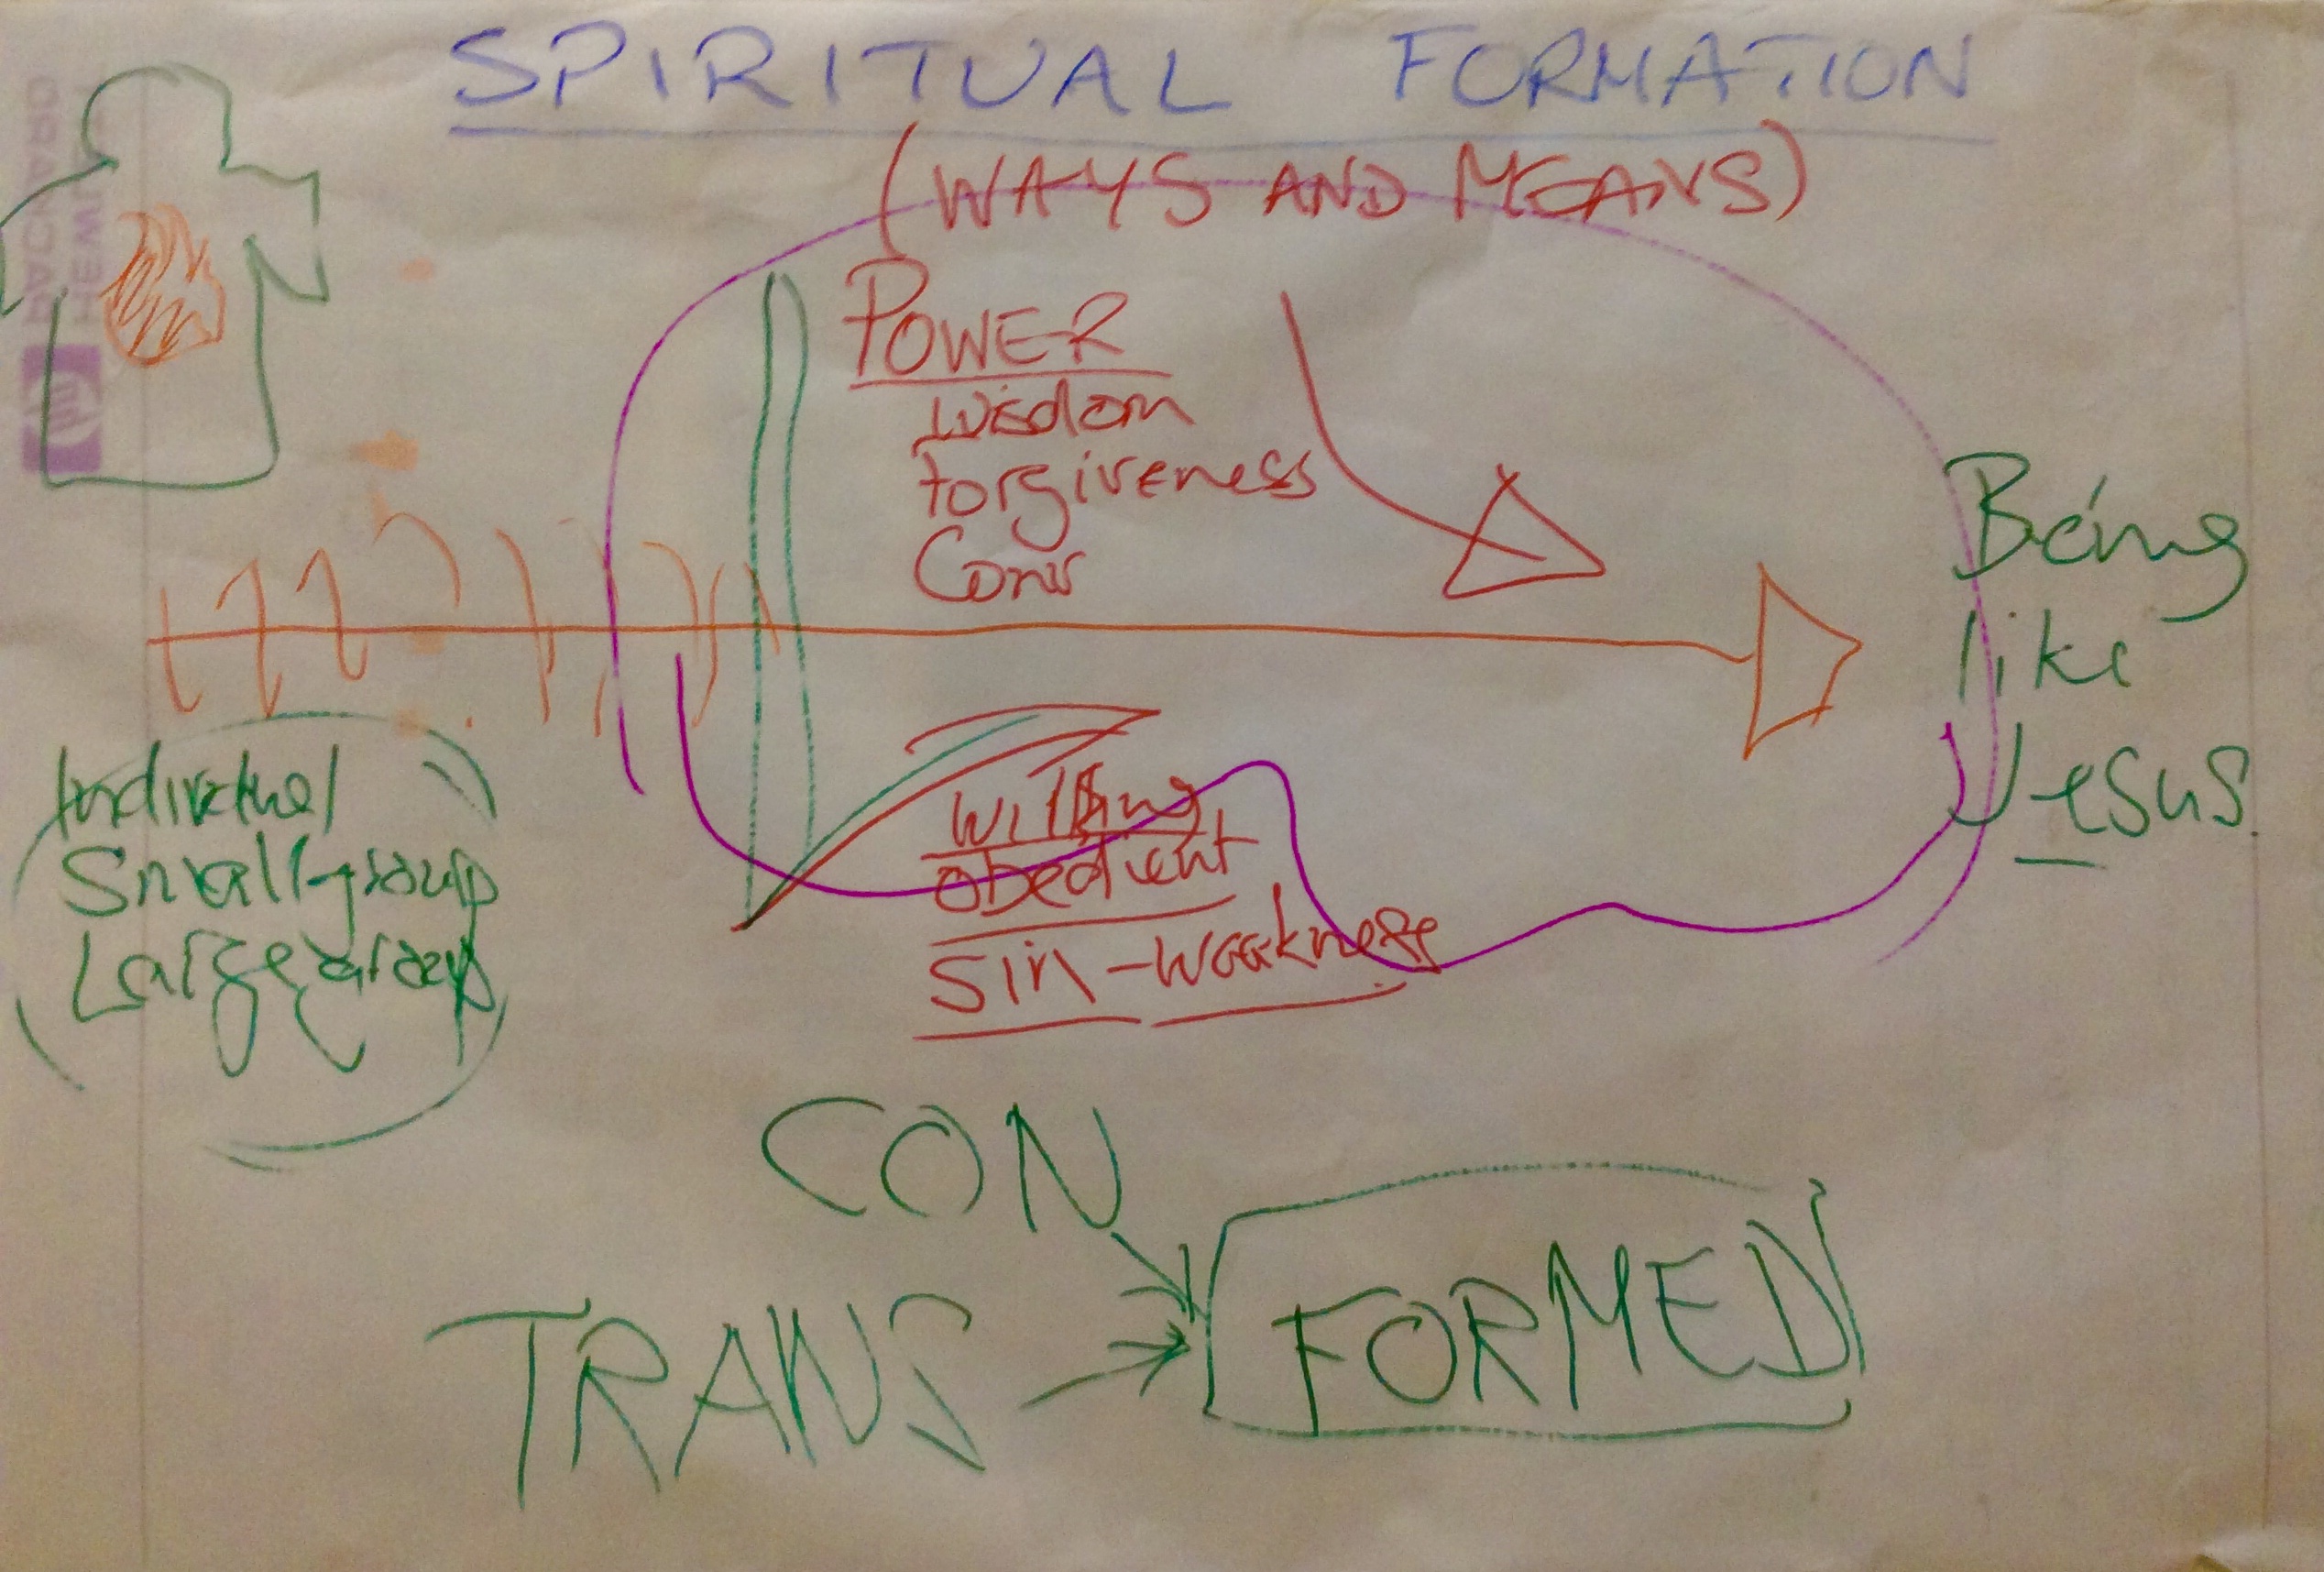 190106 - Spiritual Formation